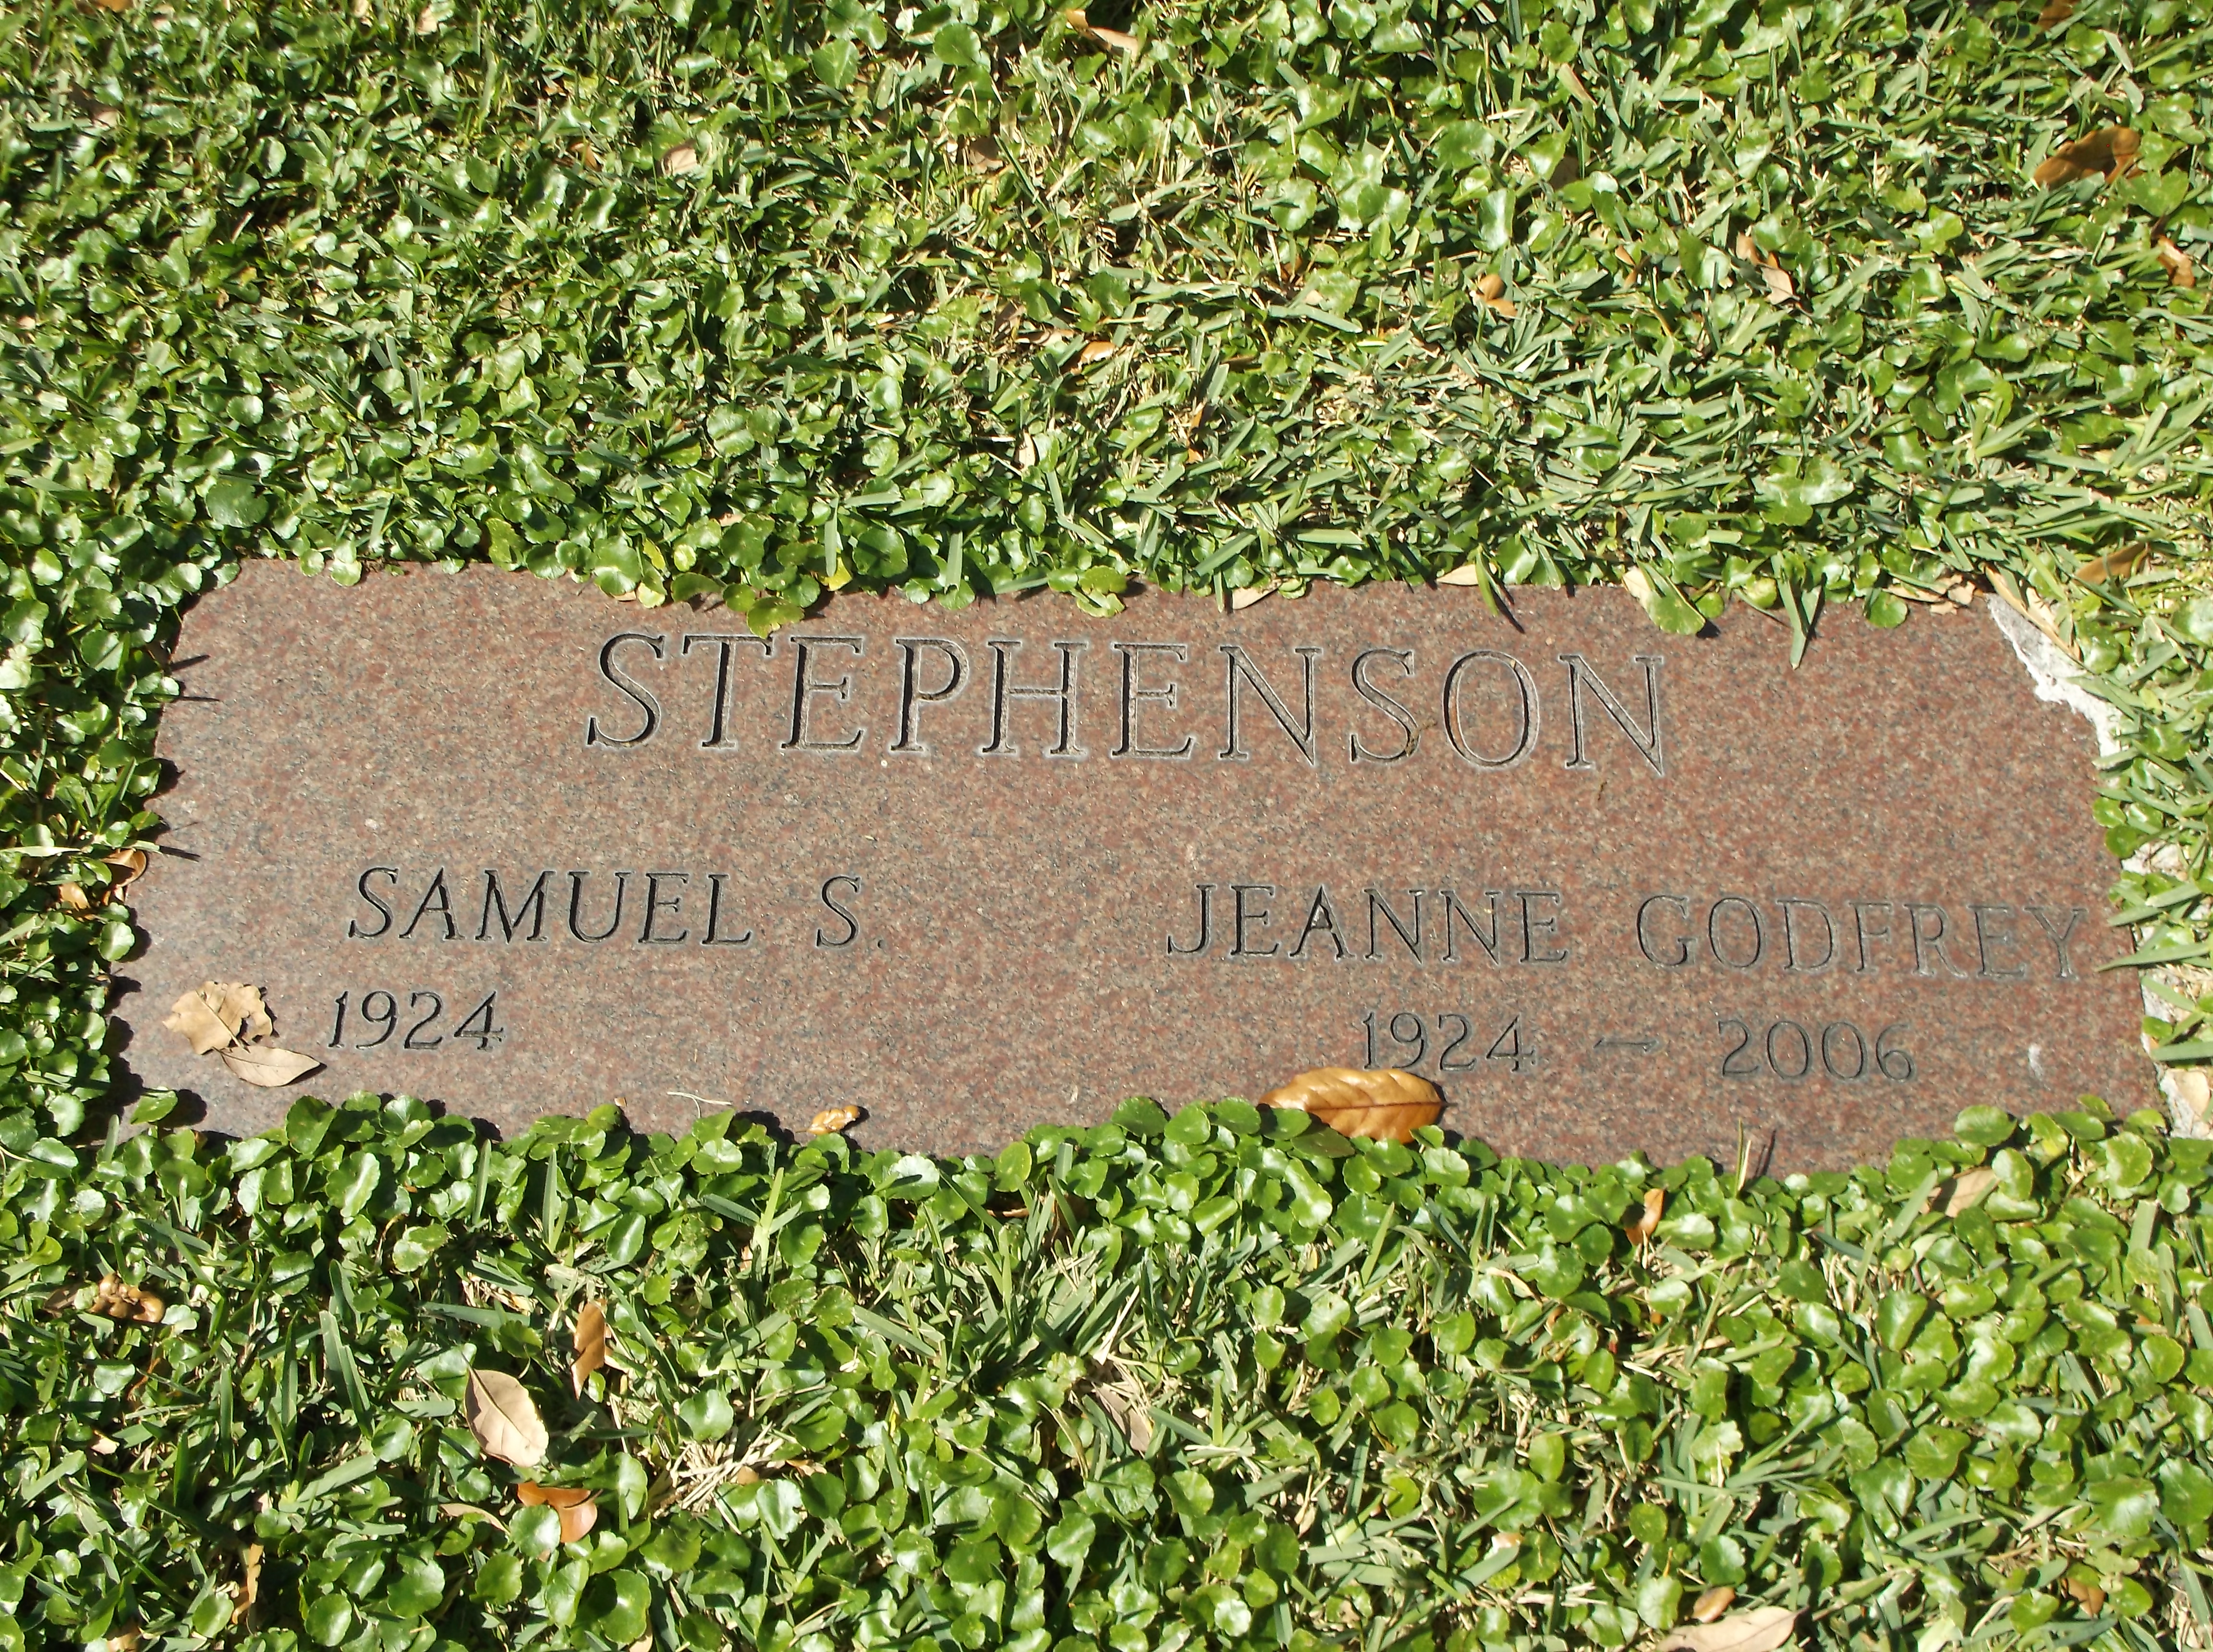 Samuel S Stephenson